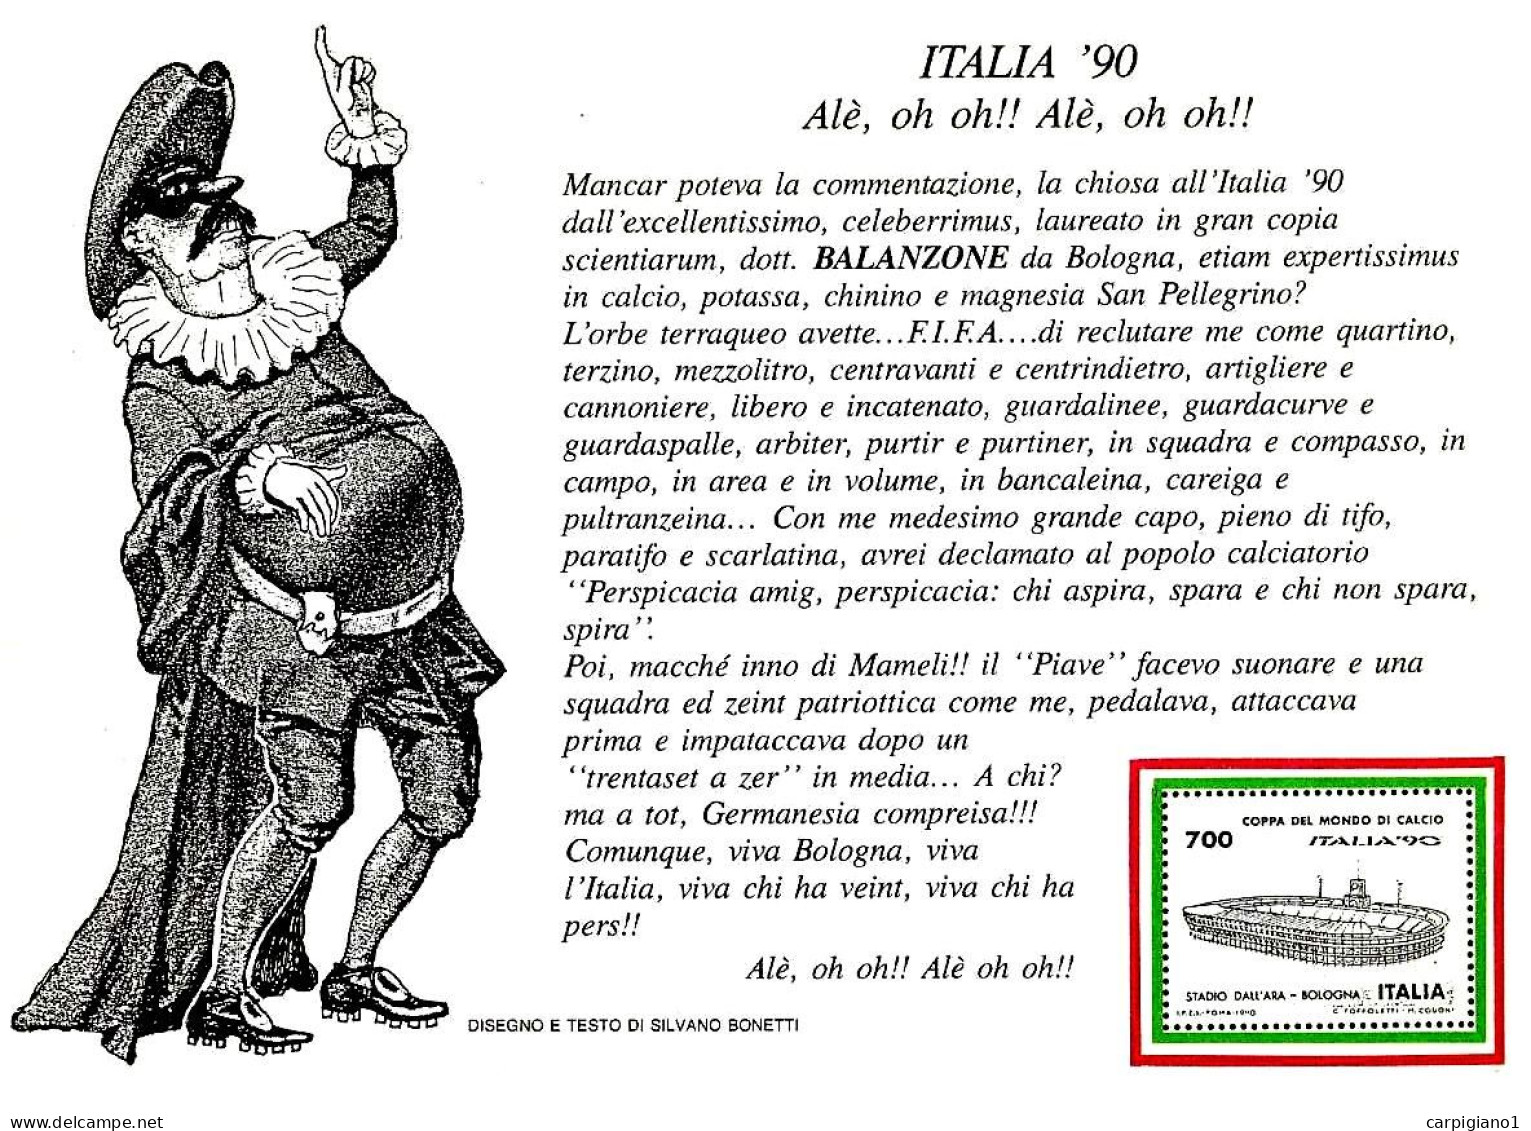 ITALIA ITALY - 1990 BOLOGNA XXXV Bophilex Sigillo S. PETRONIO Su Cartolina AFNB - 7794 - 1981-90: Poststempel